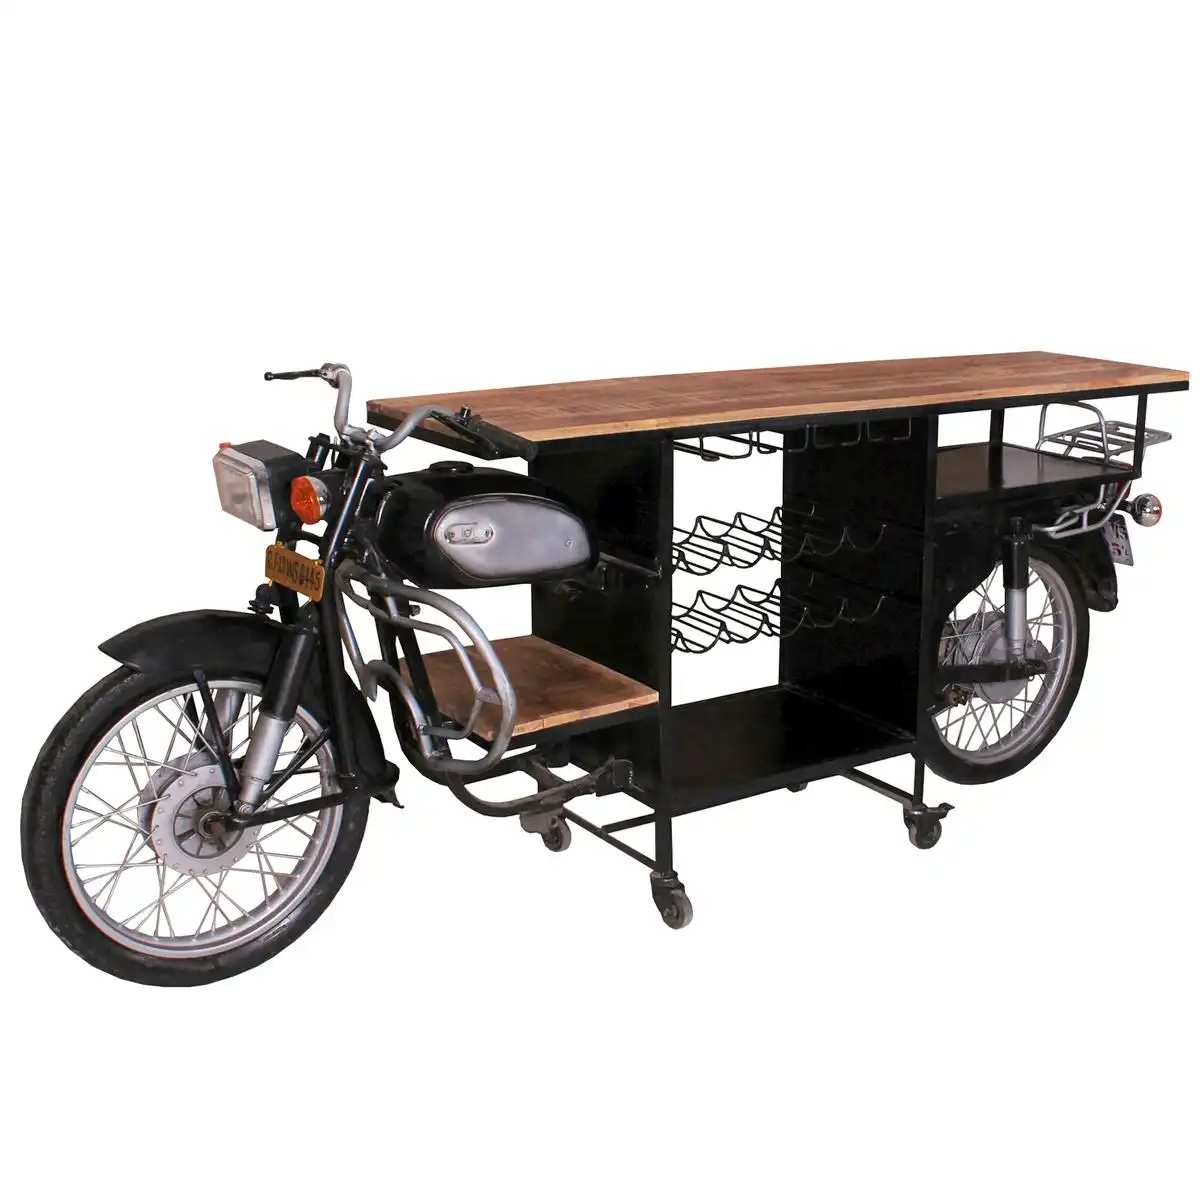 Motorcycle Bar Table - popular handicrafts